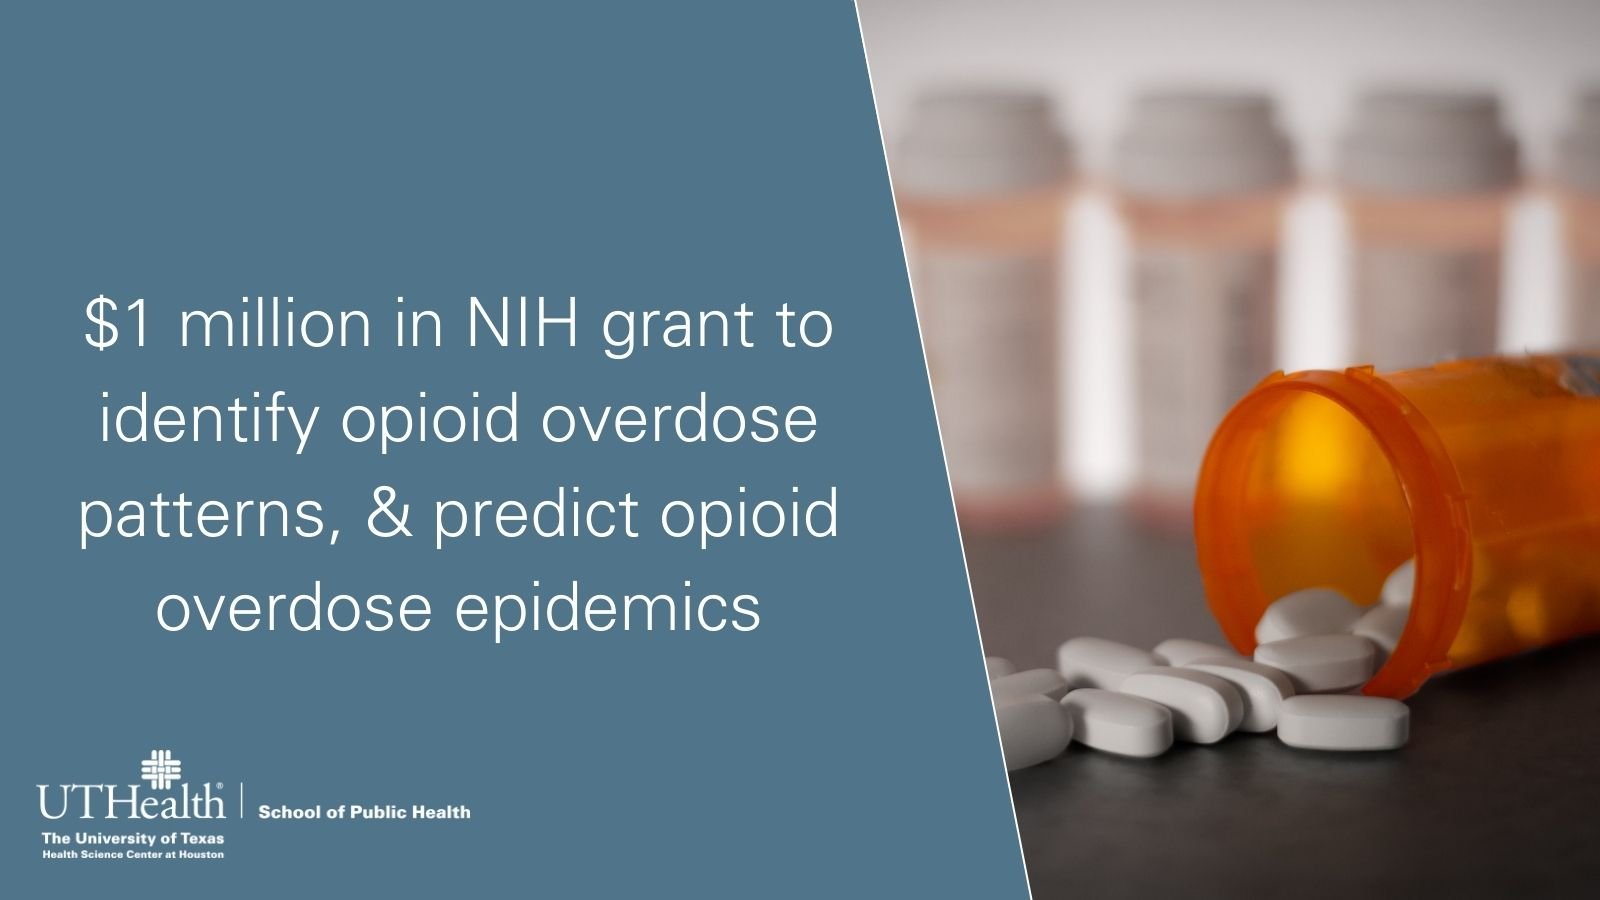 $1 million NIH grant to identify opioid overdose patterns, & predict opioid overdose epidemics